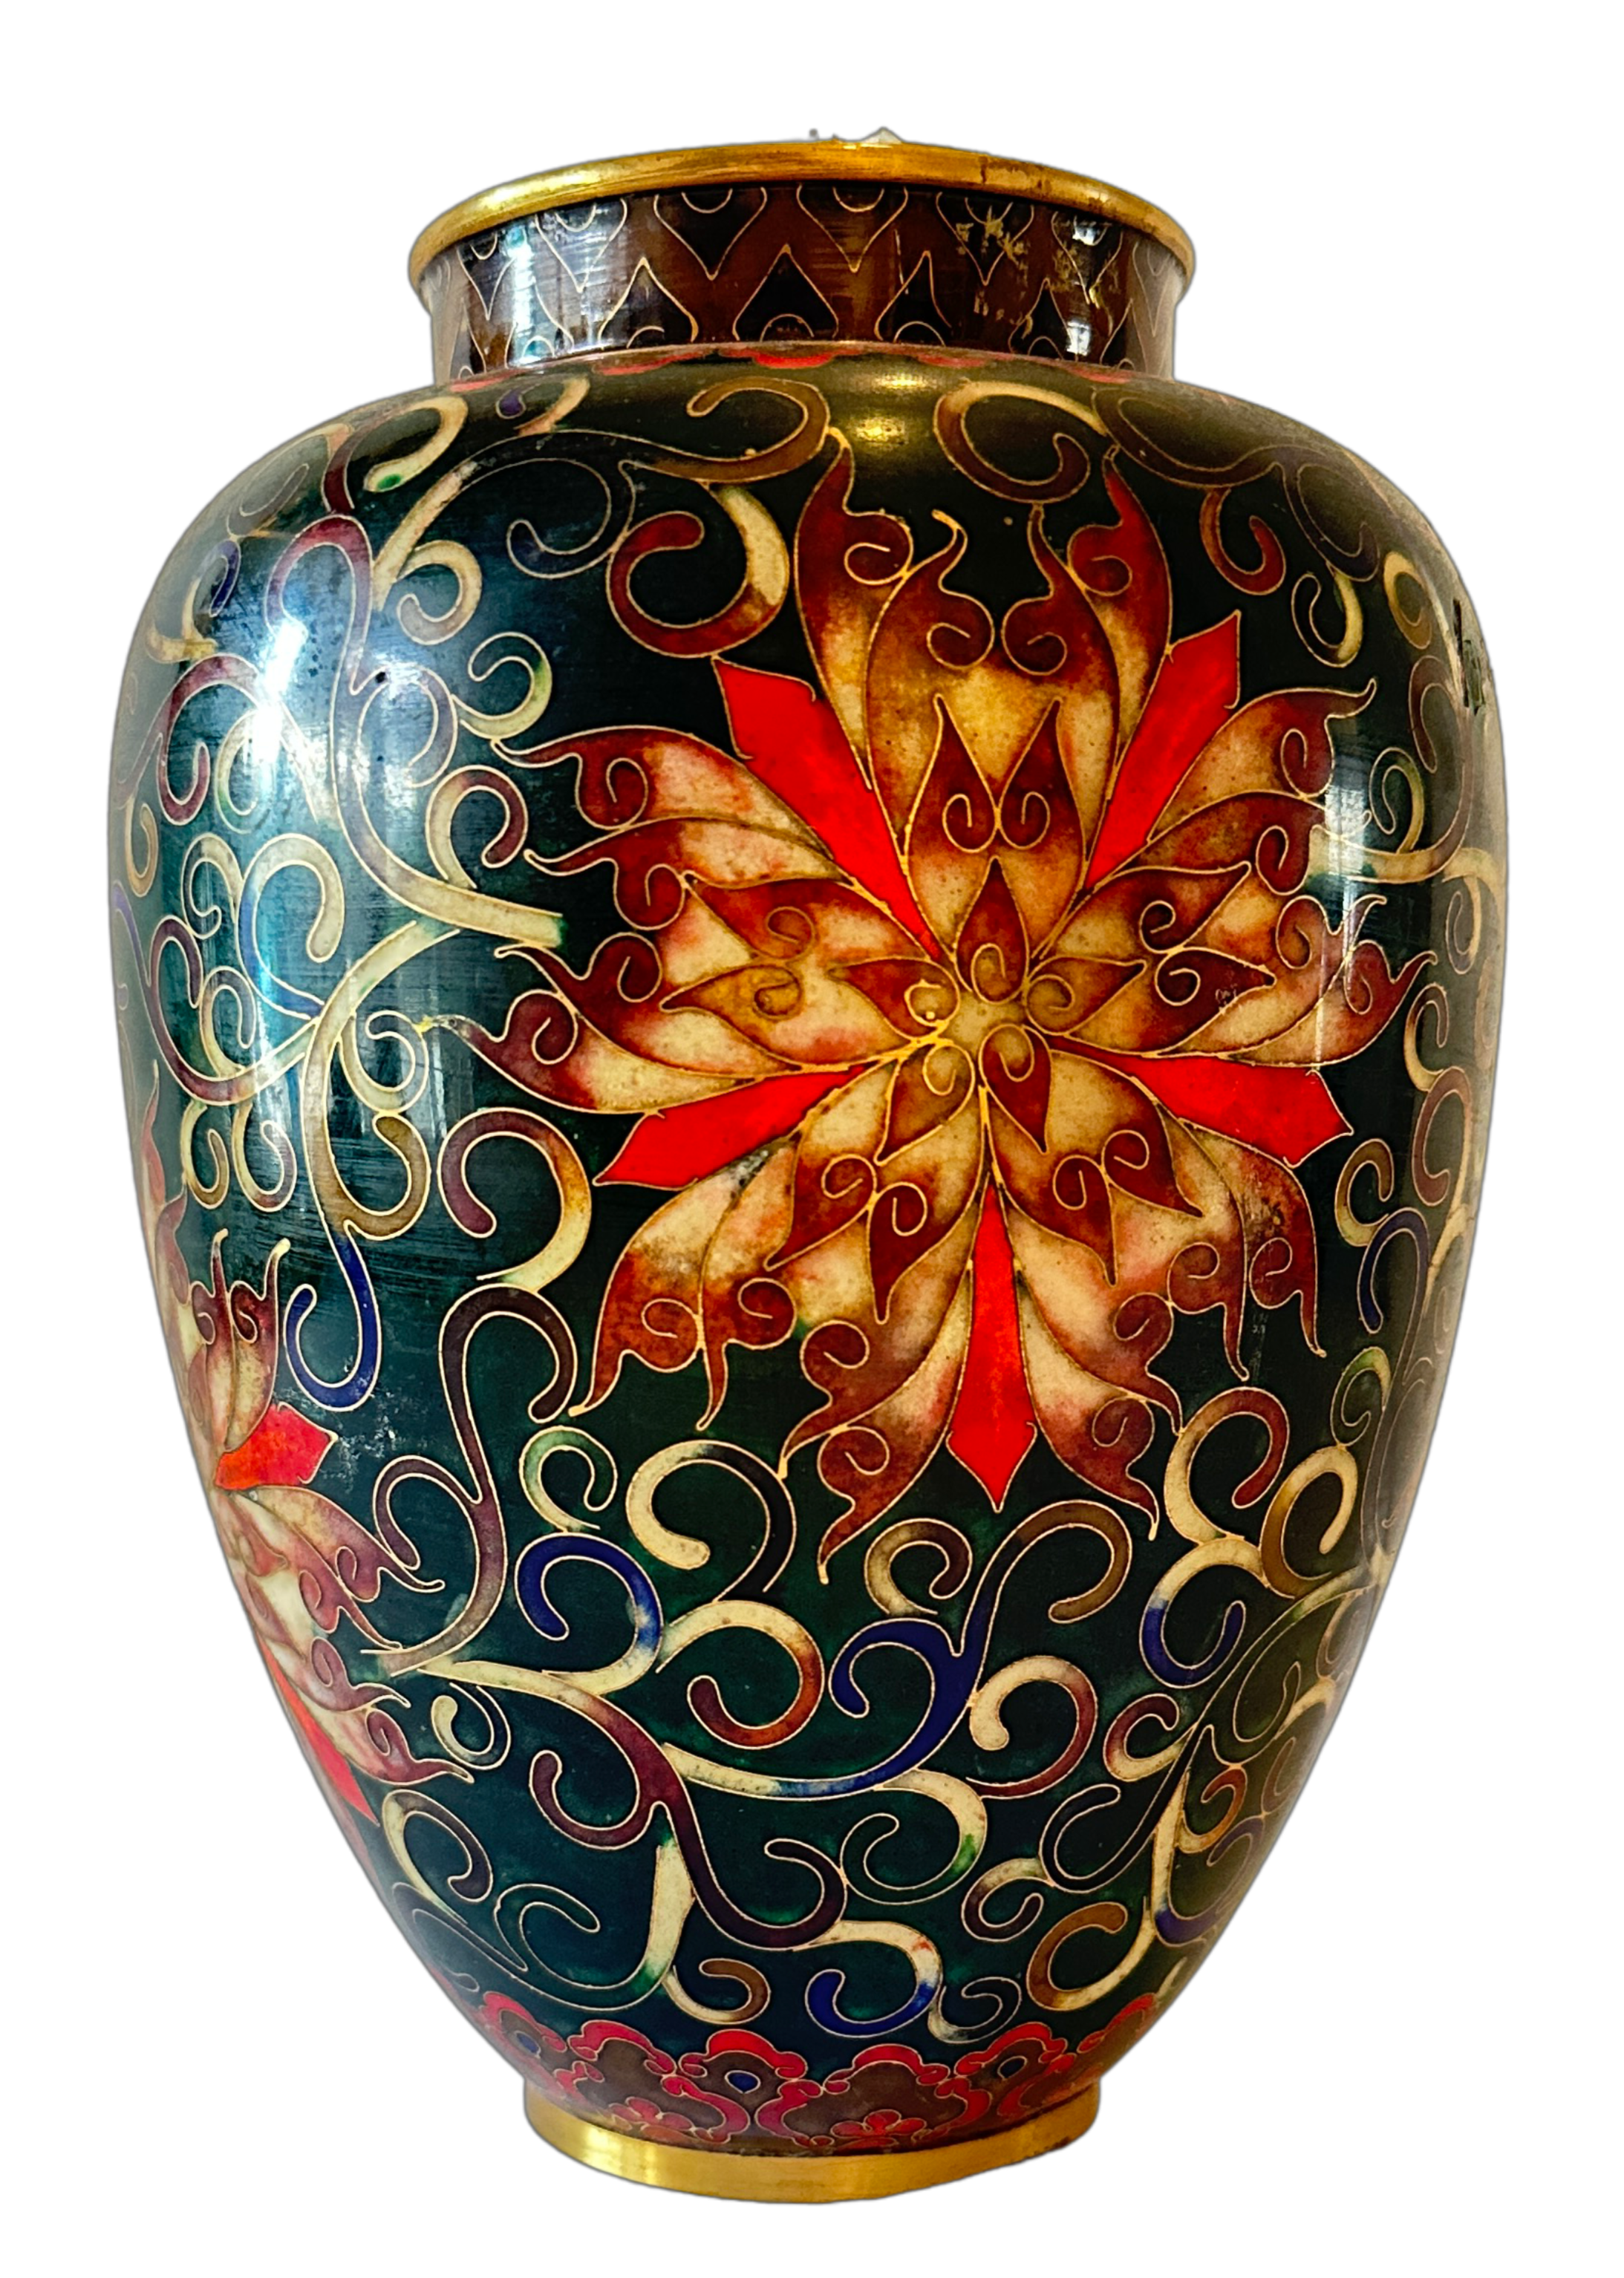 Vintage Robert Kuo Cloisonne Vase - Hunt and Bloom